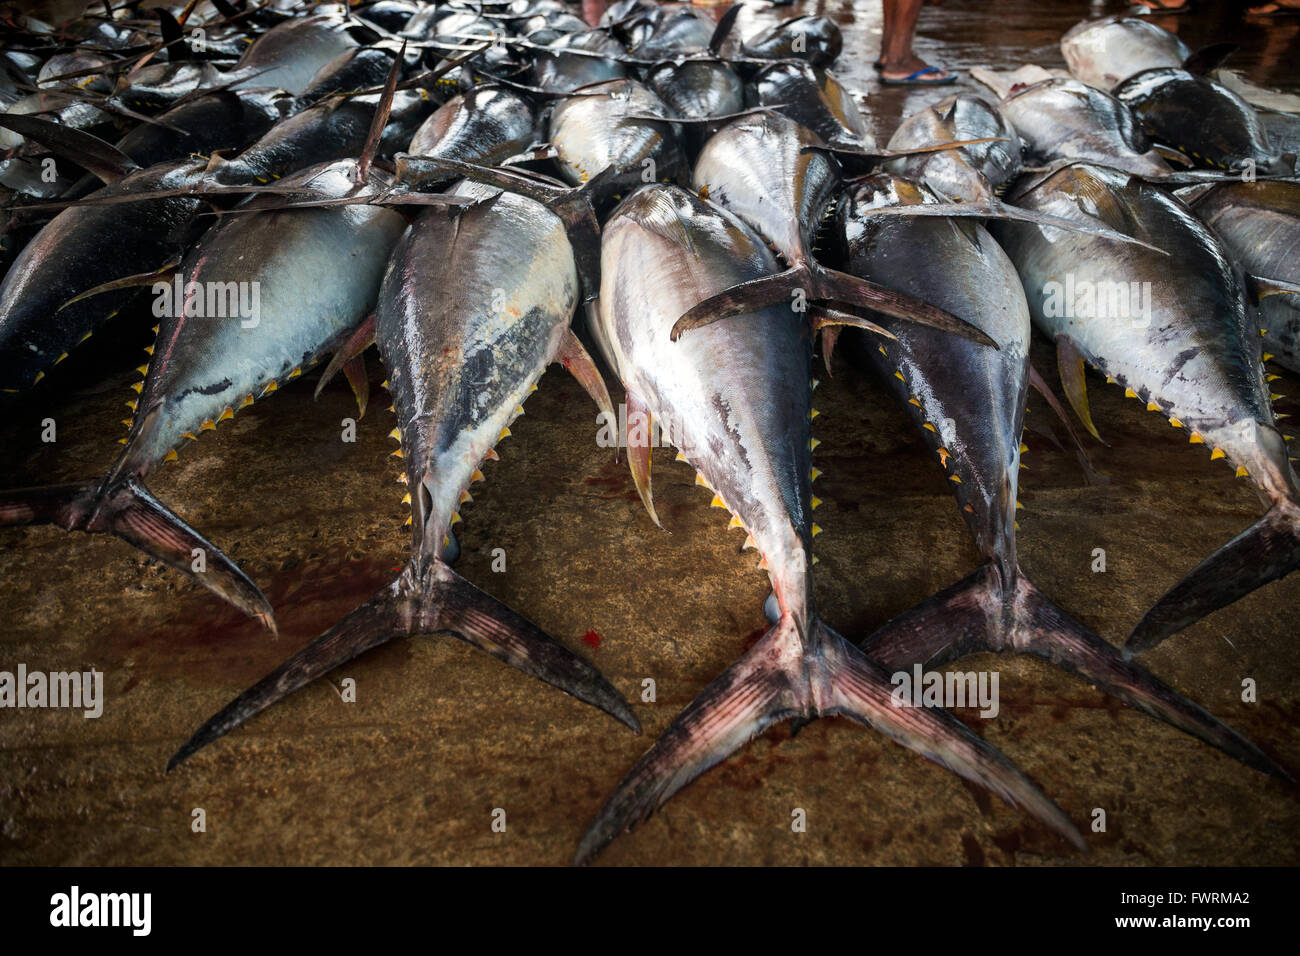 Big fish harvest (import to Japan), Fishing port, Negombo lagoon, Negombo, Sri Lanka, Indian Ocean, Asia Stock Photo